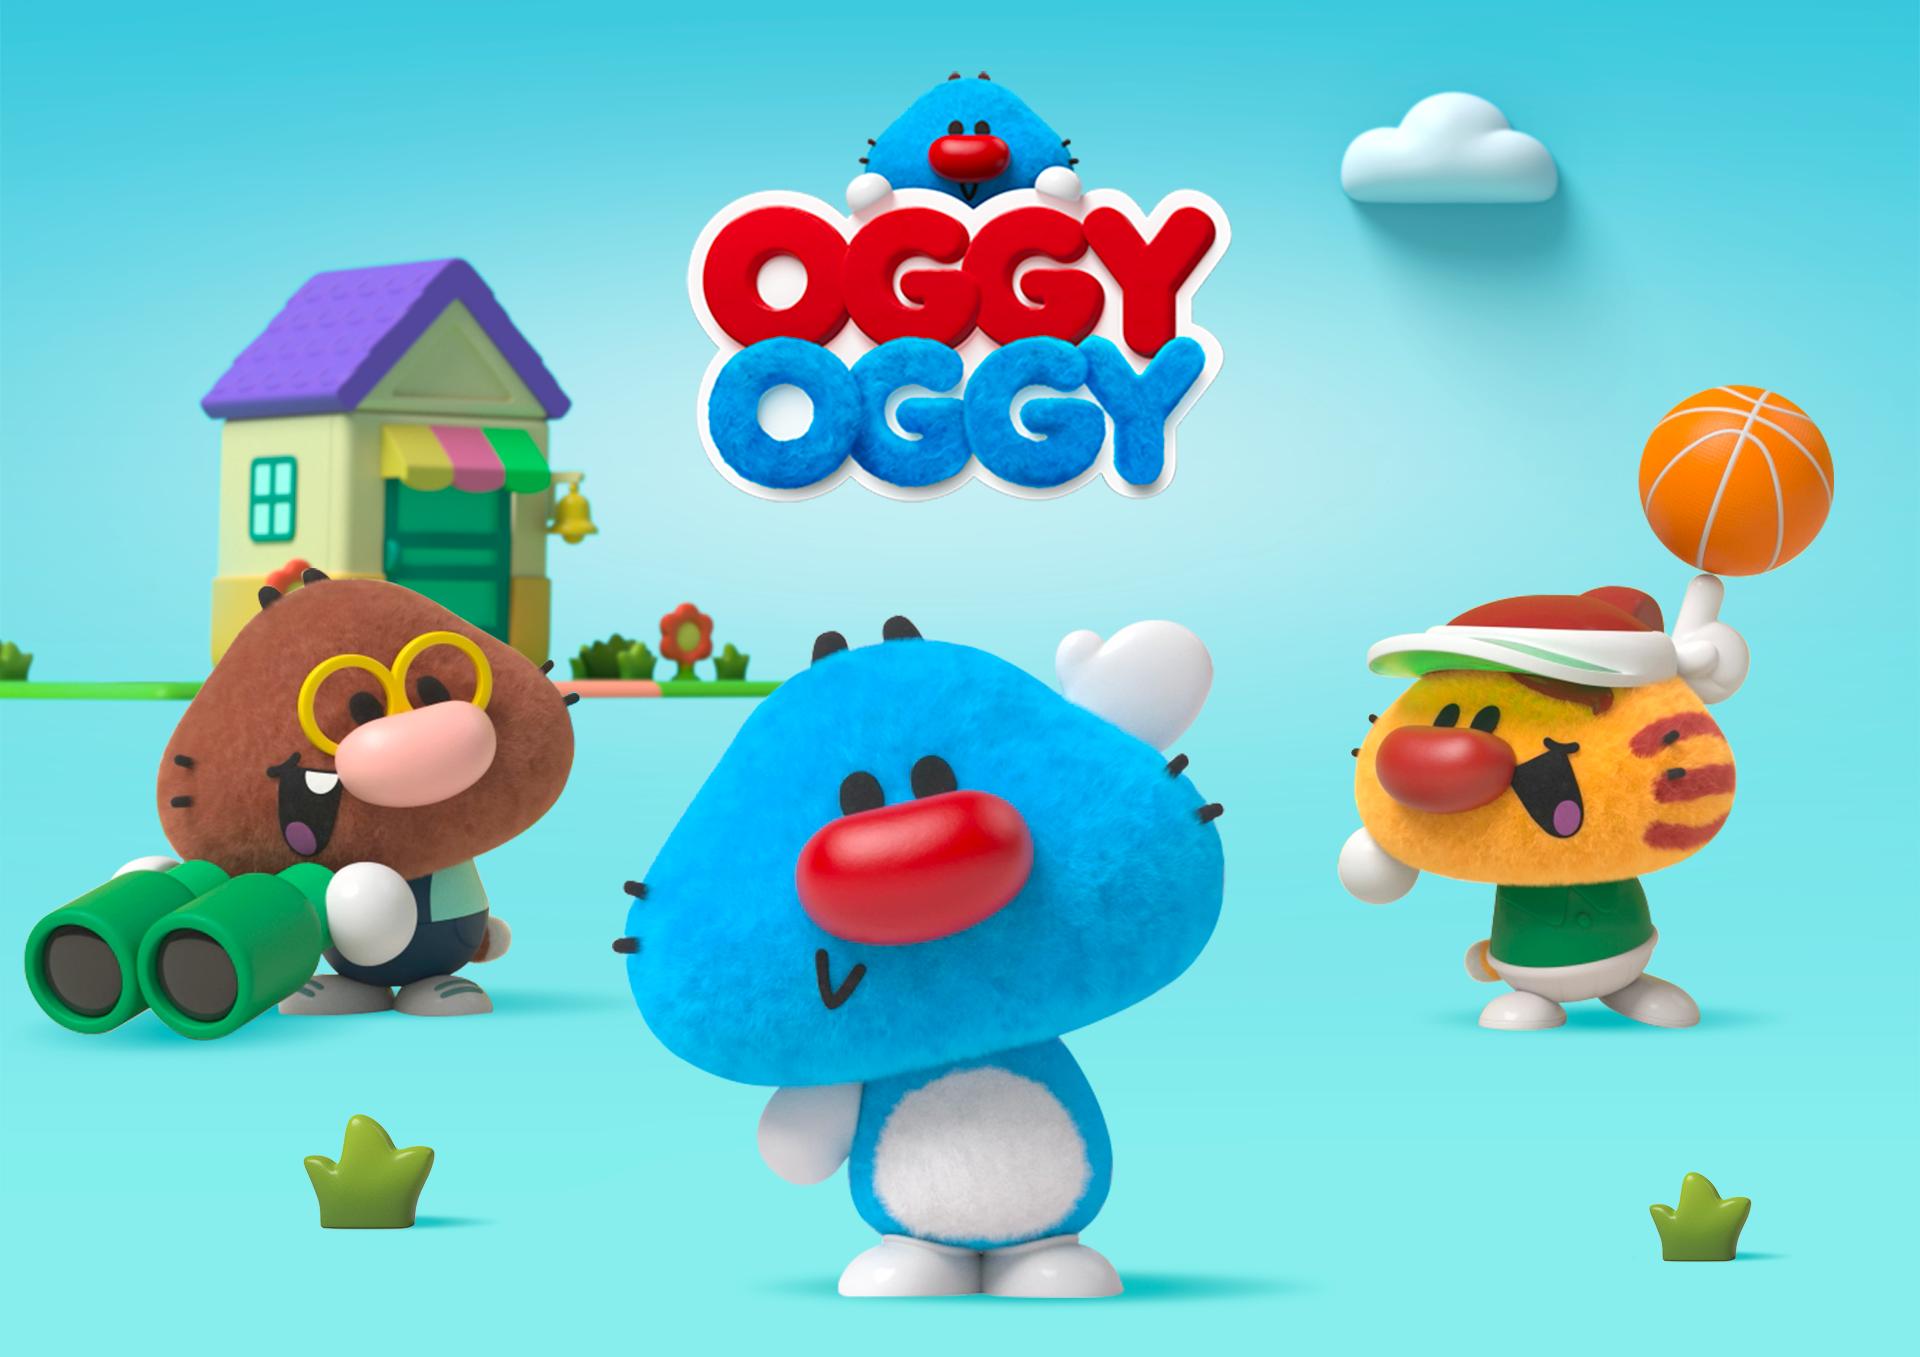 Oggy Oggy (2021)